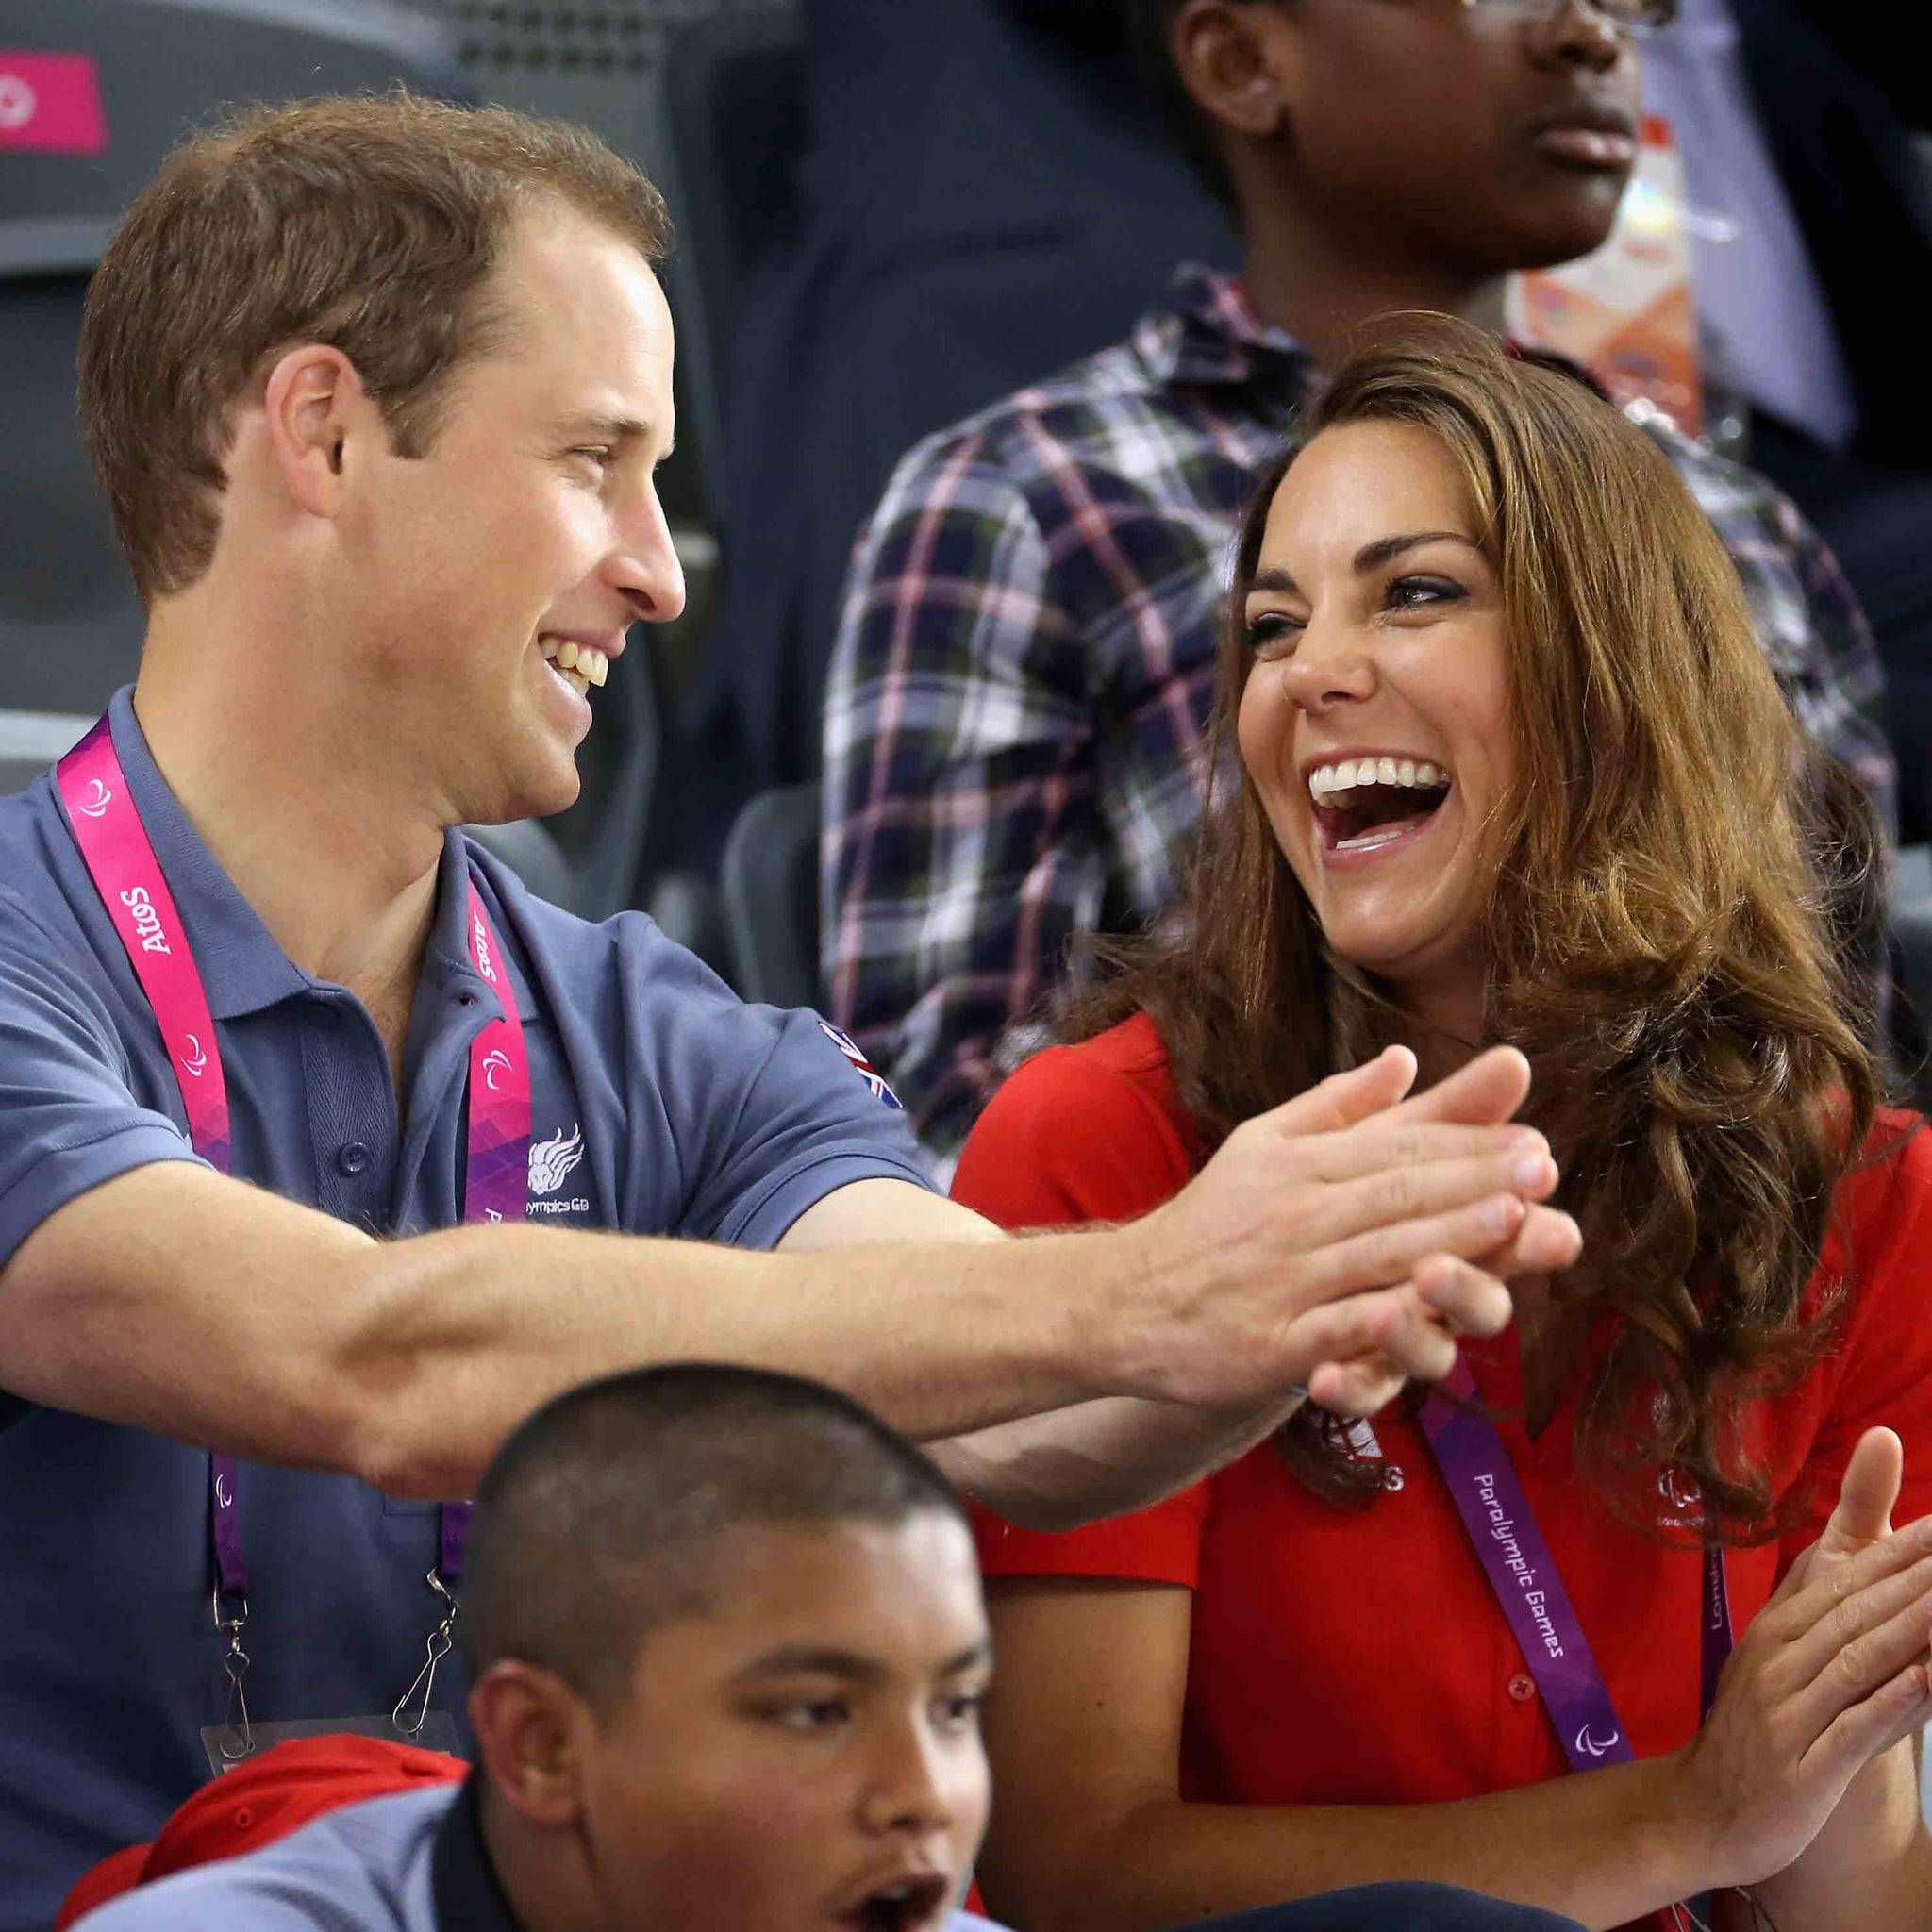 Kate Middleton and Prince William Funny Expressions | POPSUGAR Celebrity